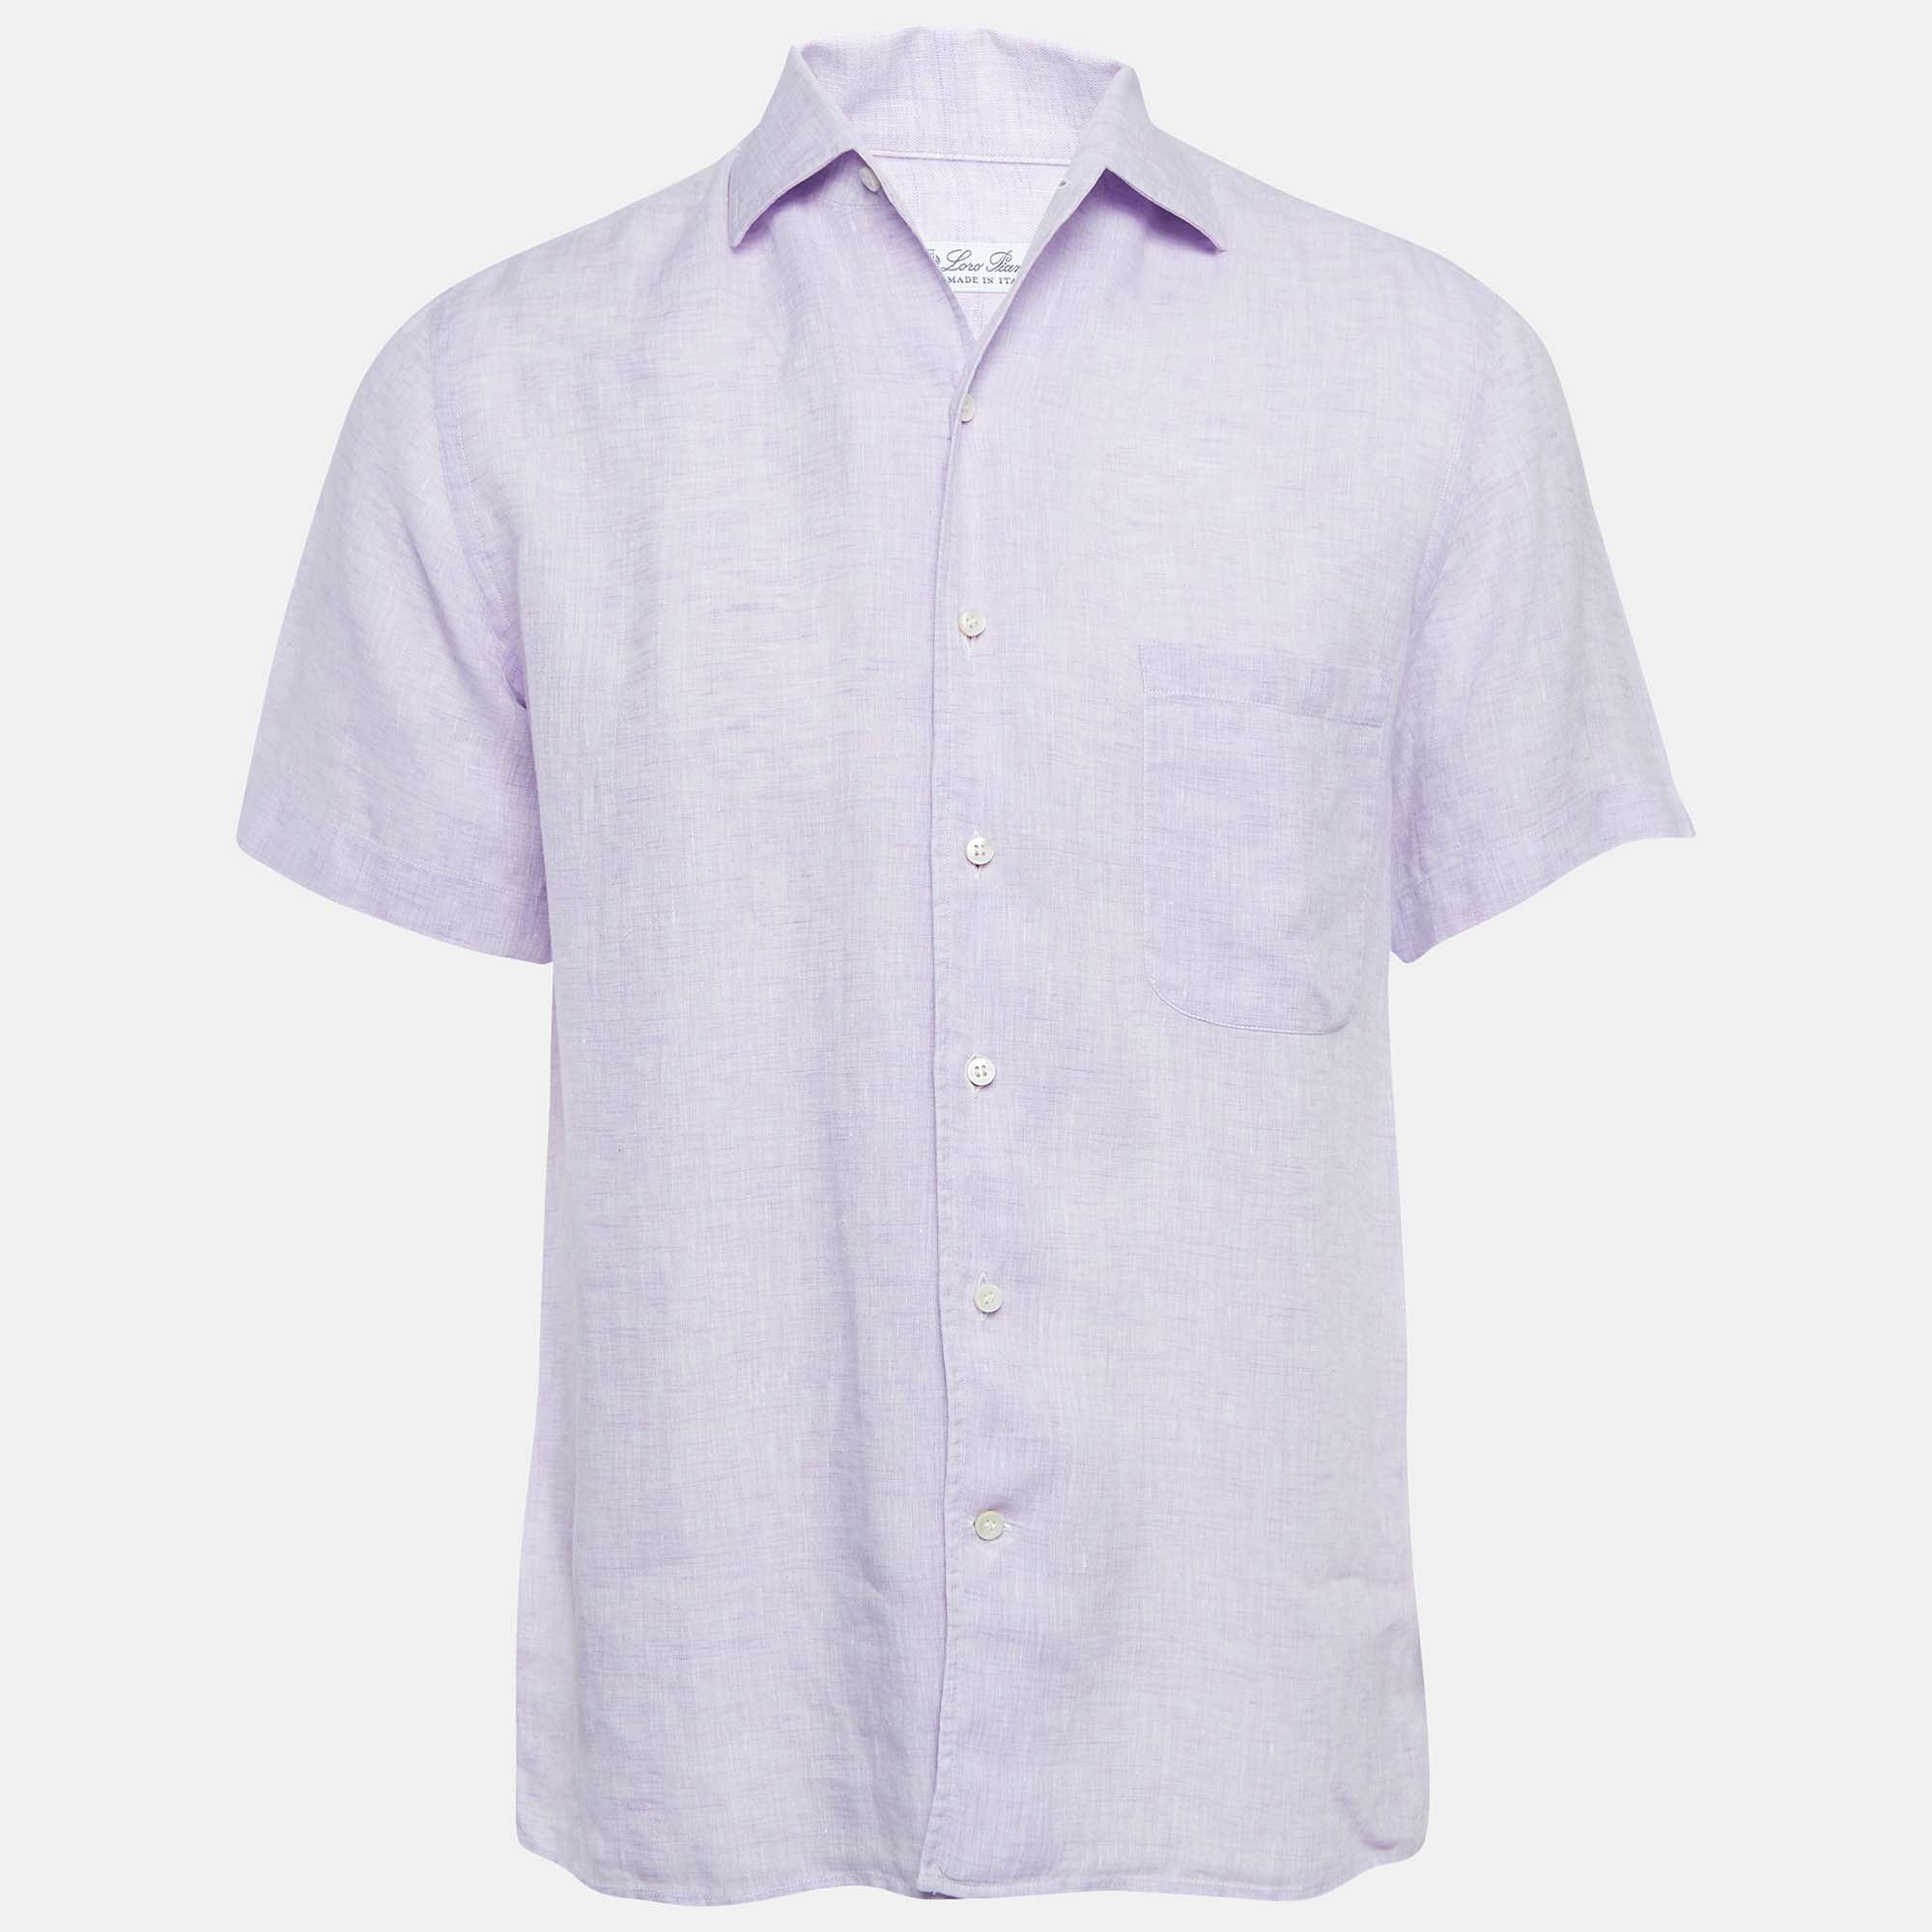 Loro piana lavender linen short sleeve shirt s